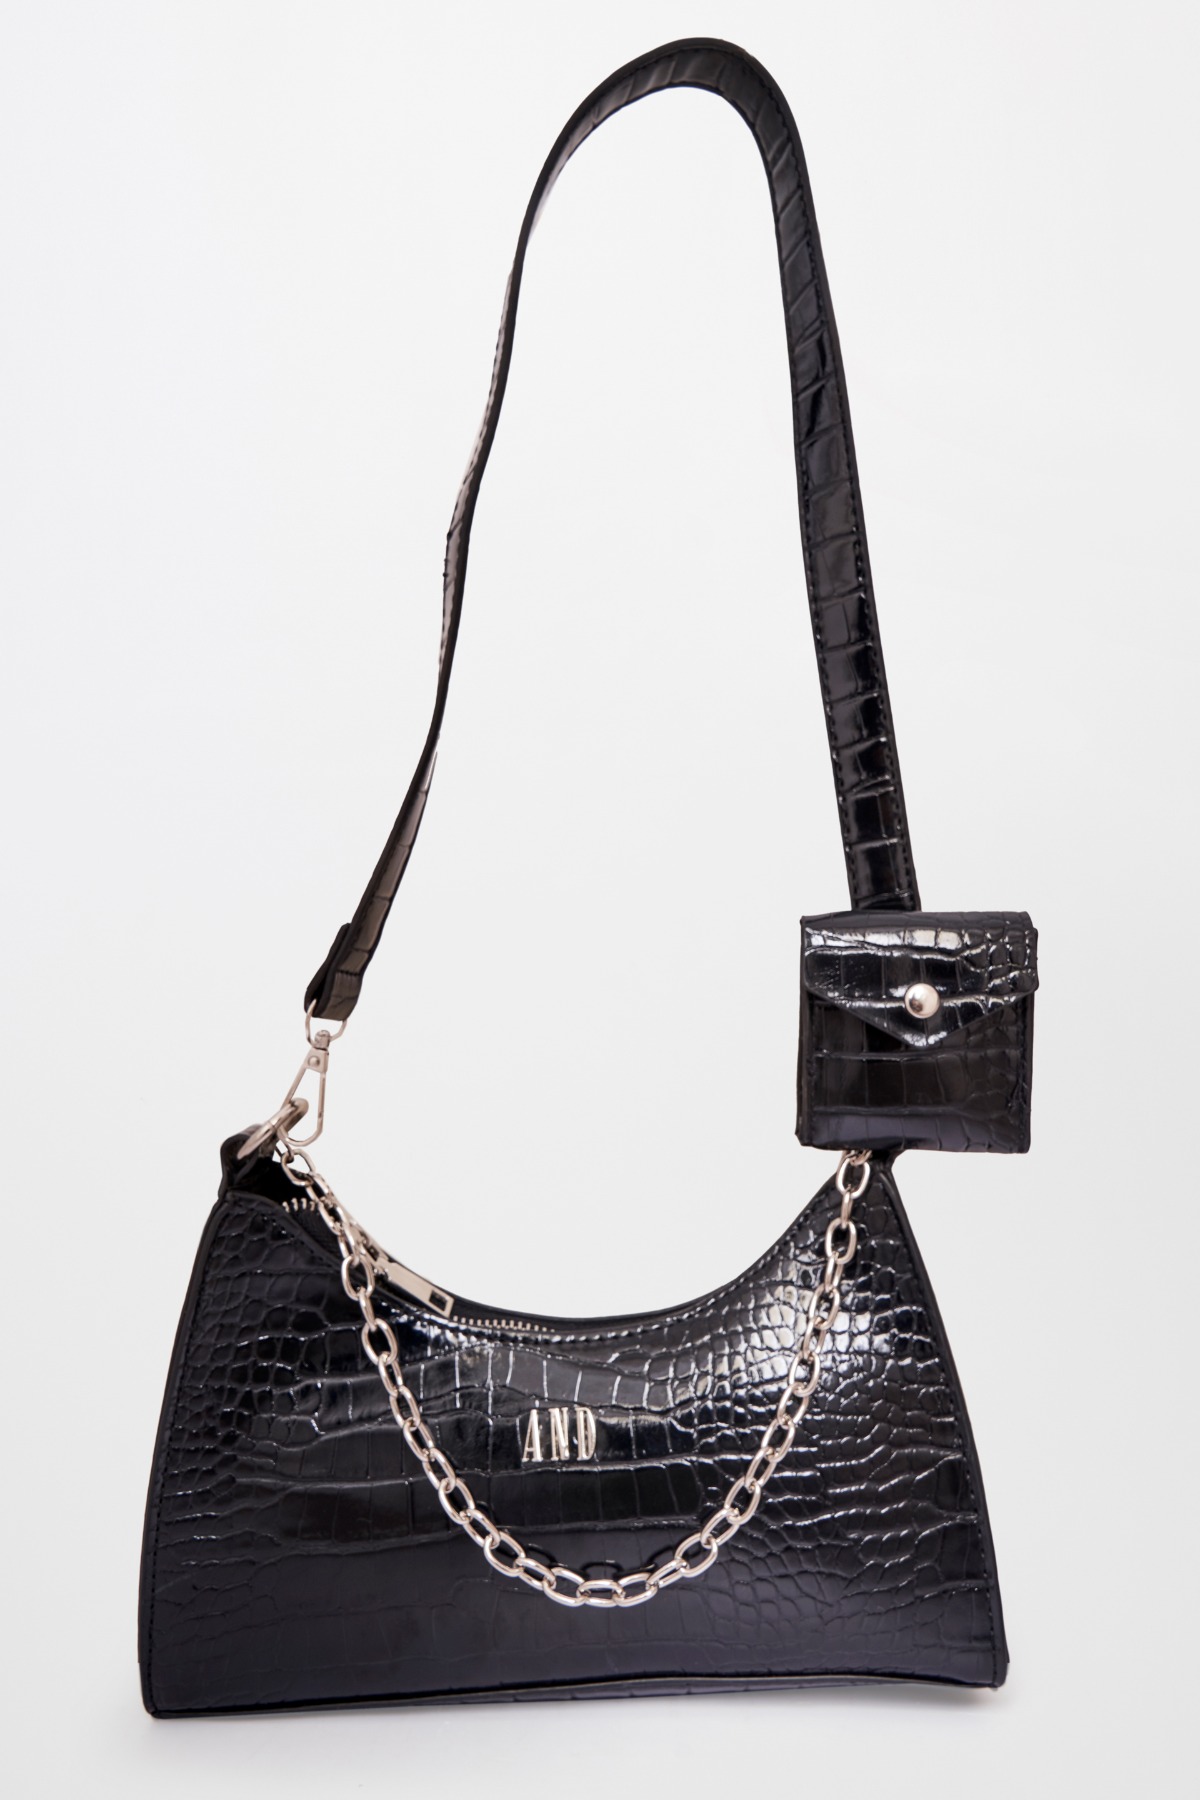 2 - Black Handbag, image 2